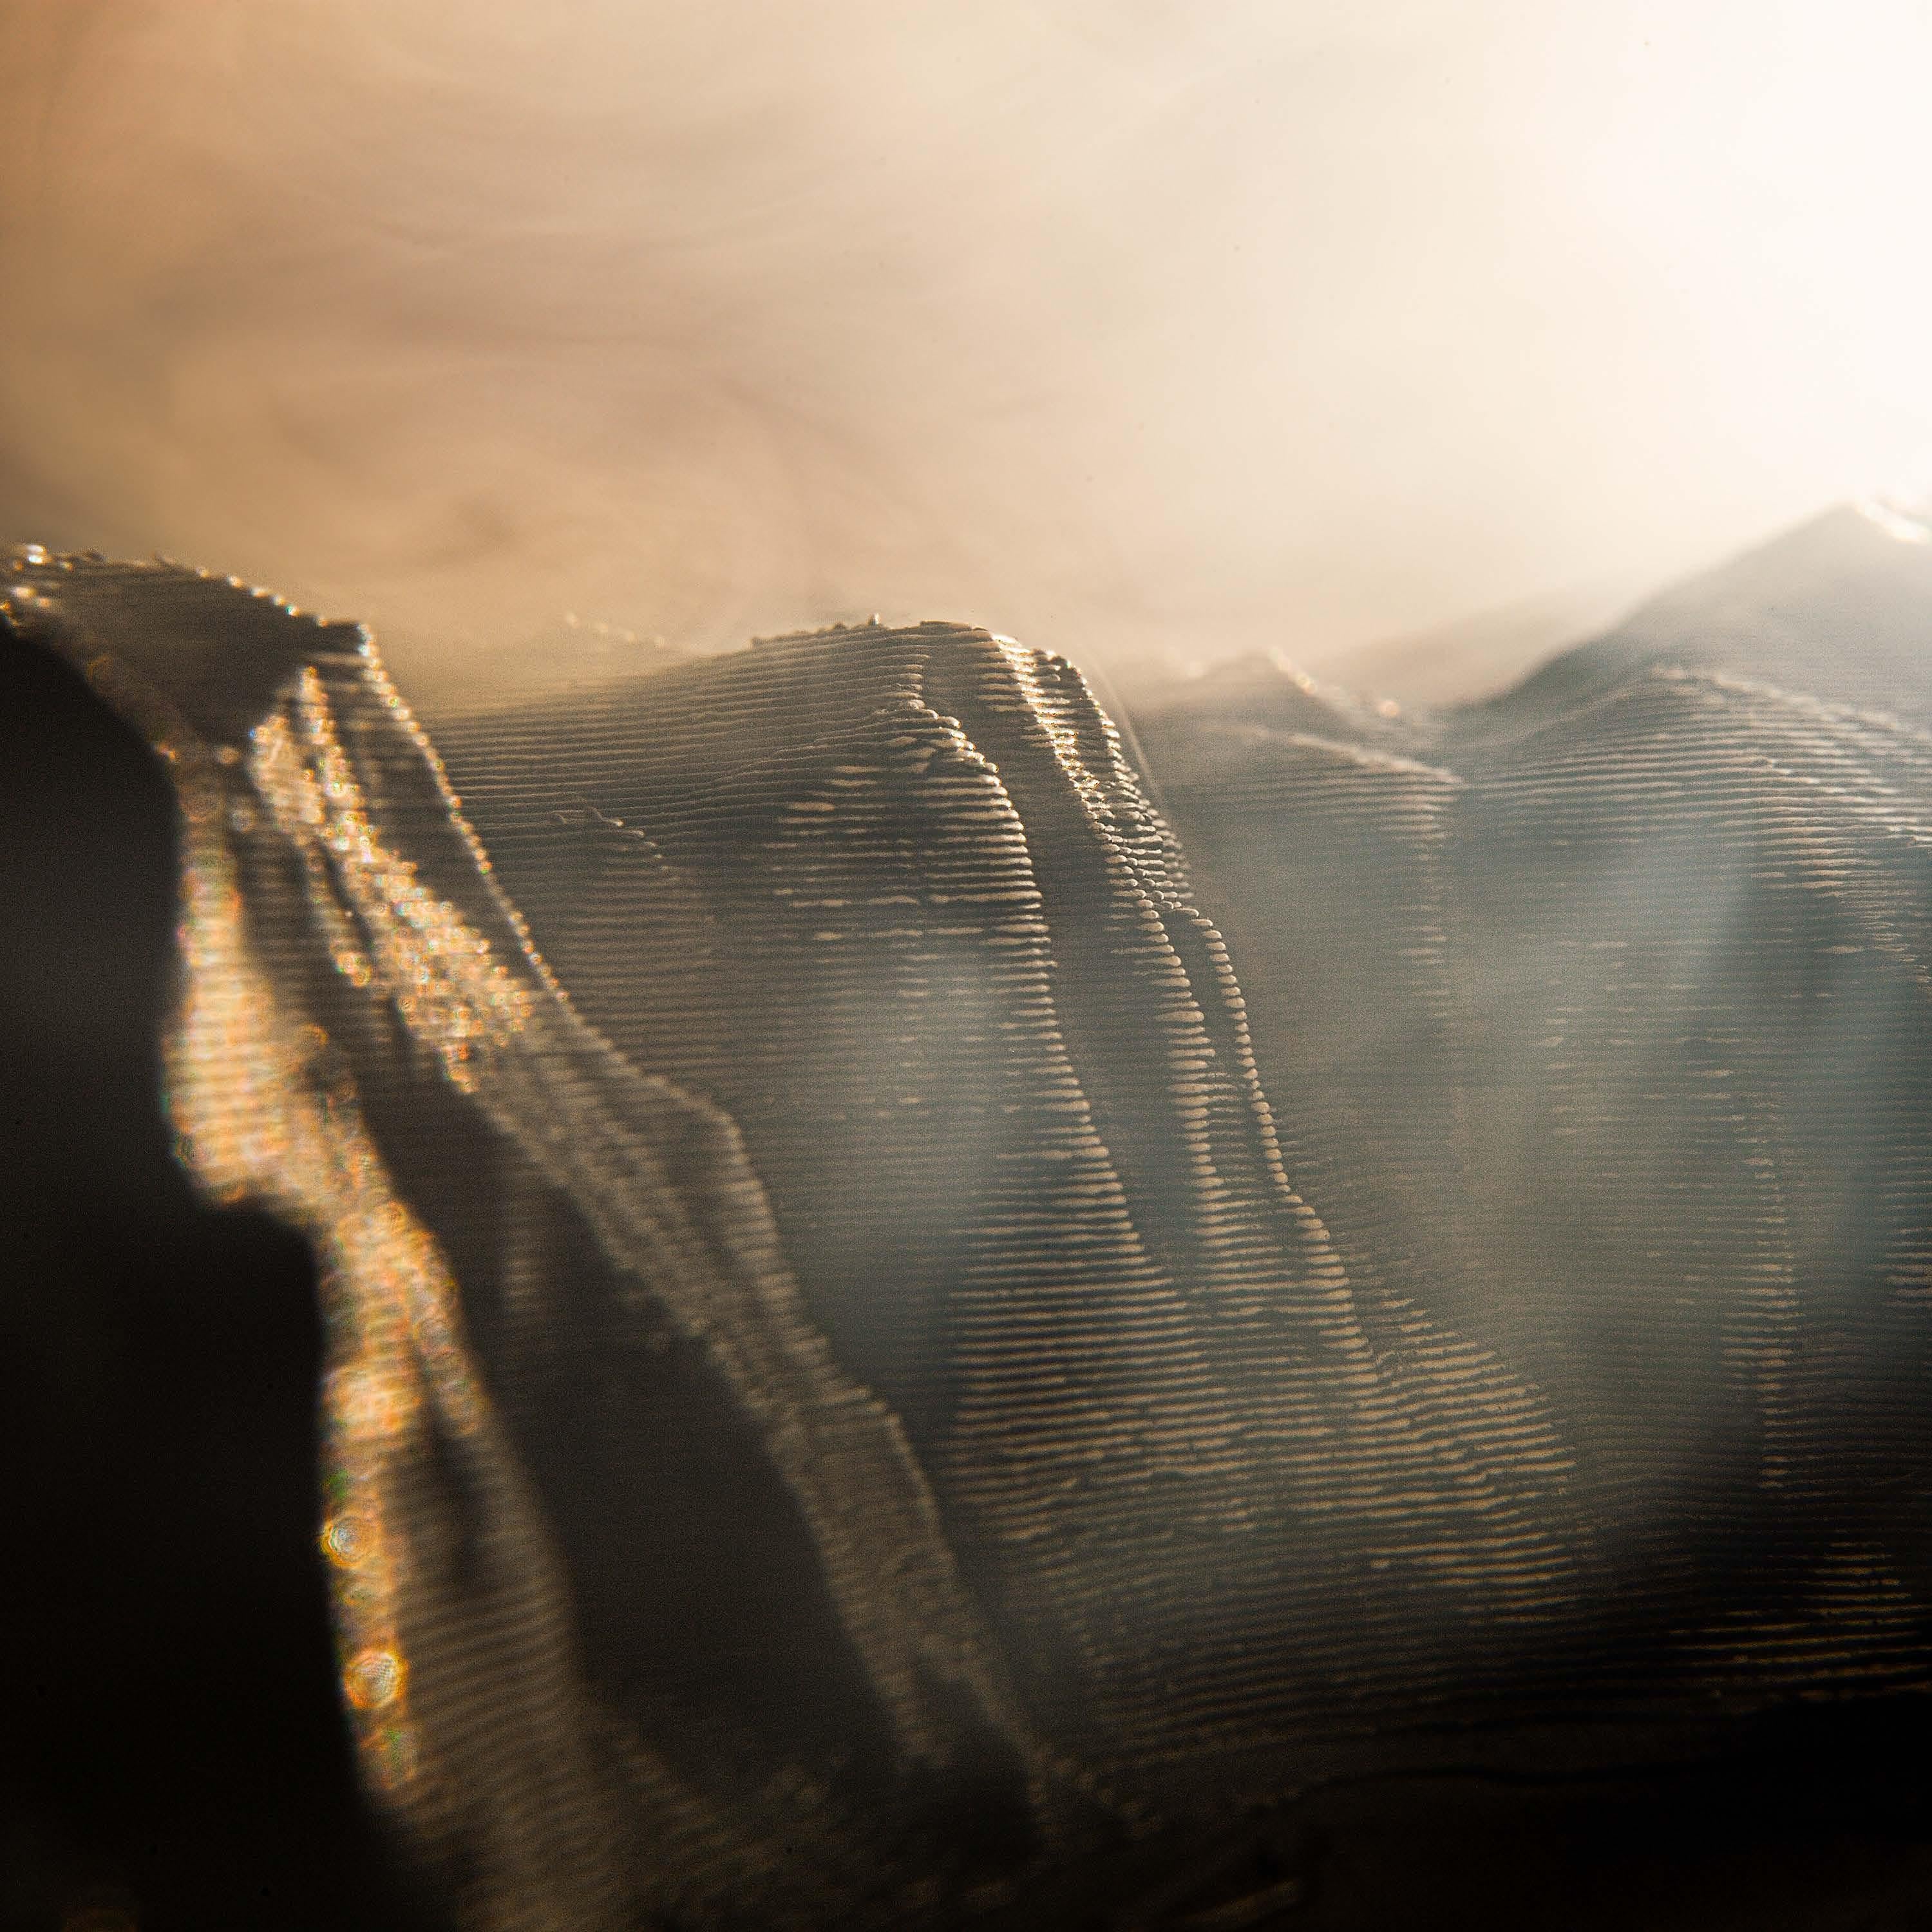 Edward Bateman Landscape Photograph - Mount Watkins Sunset No. 1 (with 3D printed landscape)